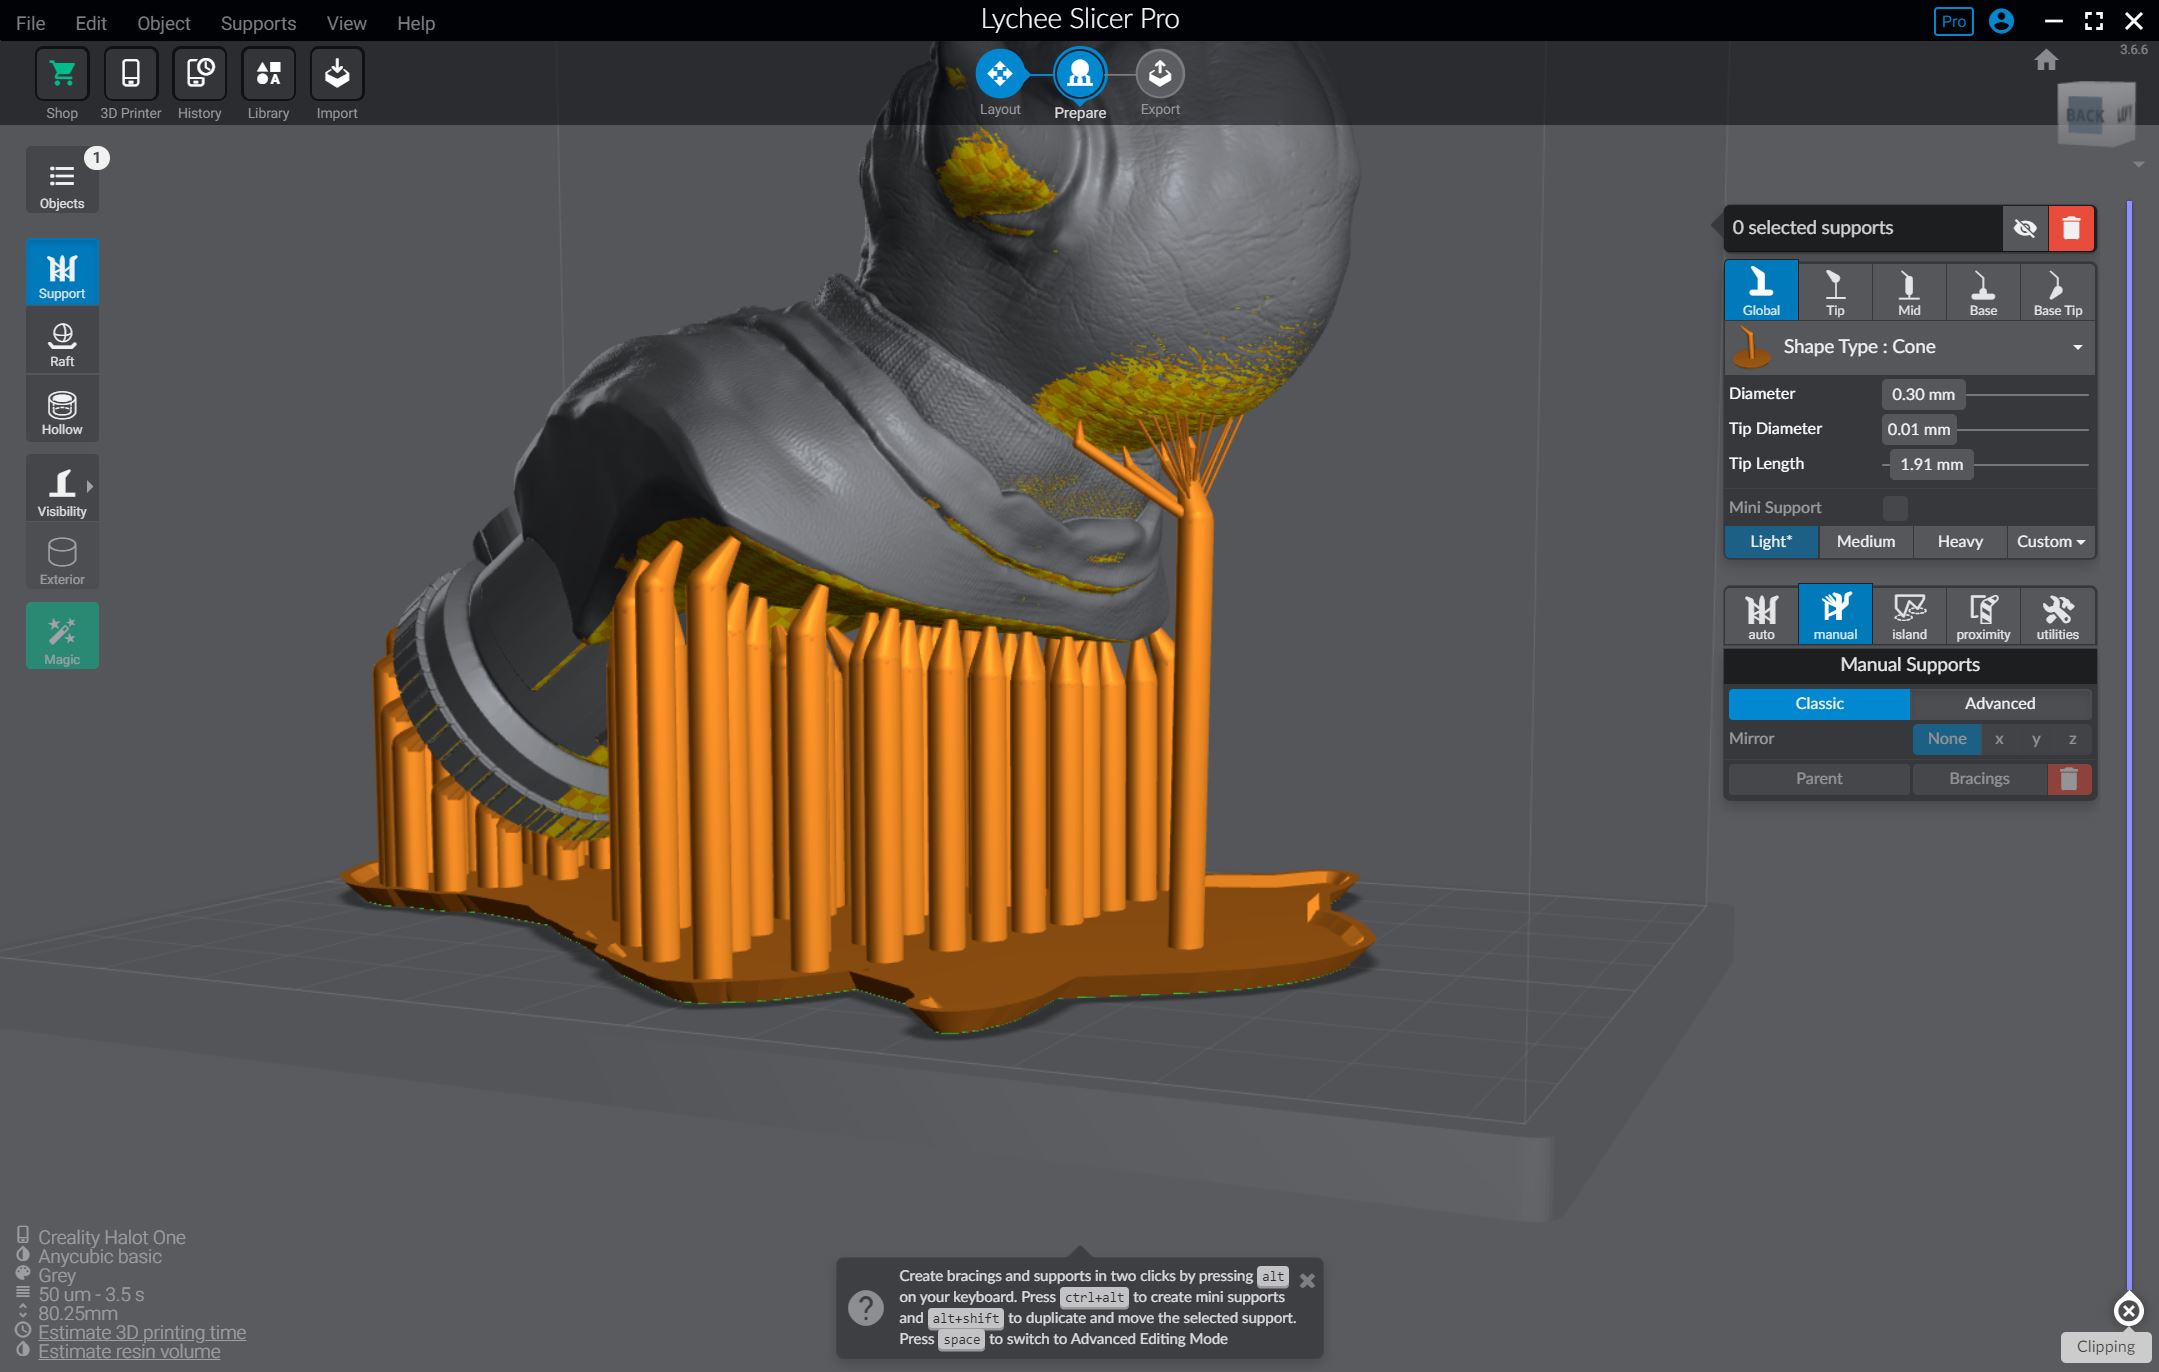 Come funziona una stampante 3D - Guide - Stampa 3D forum